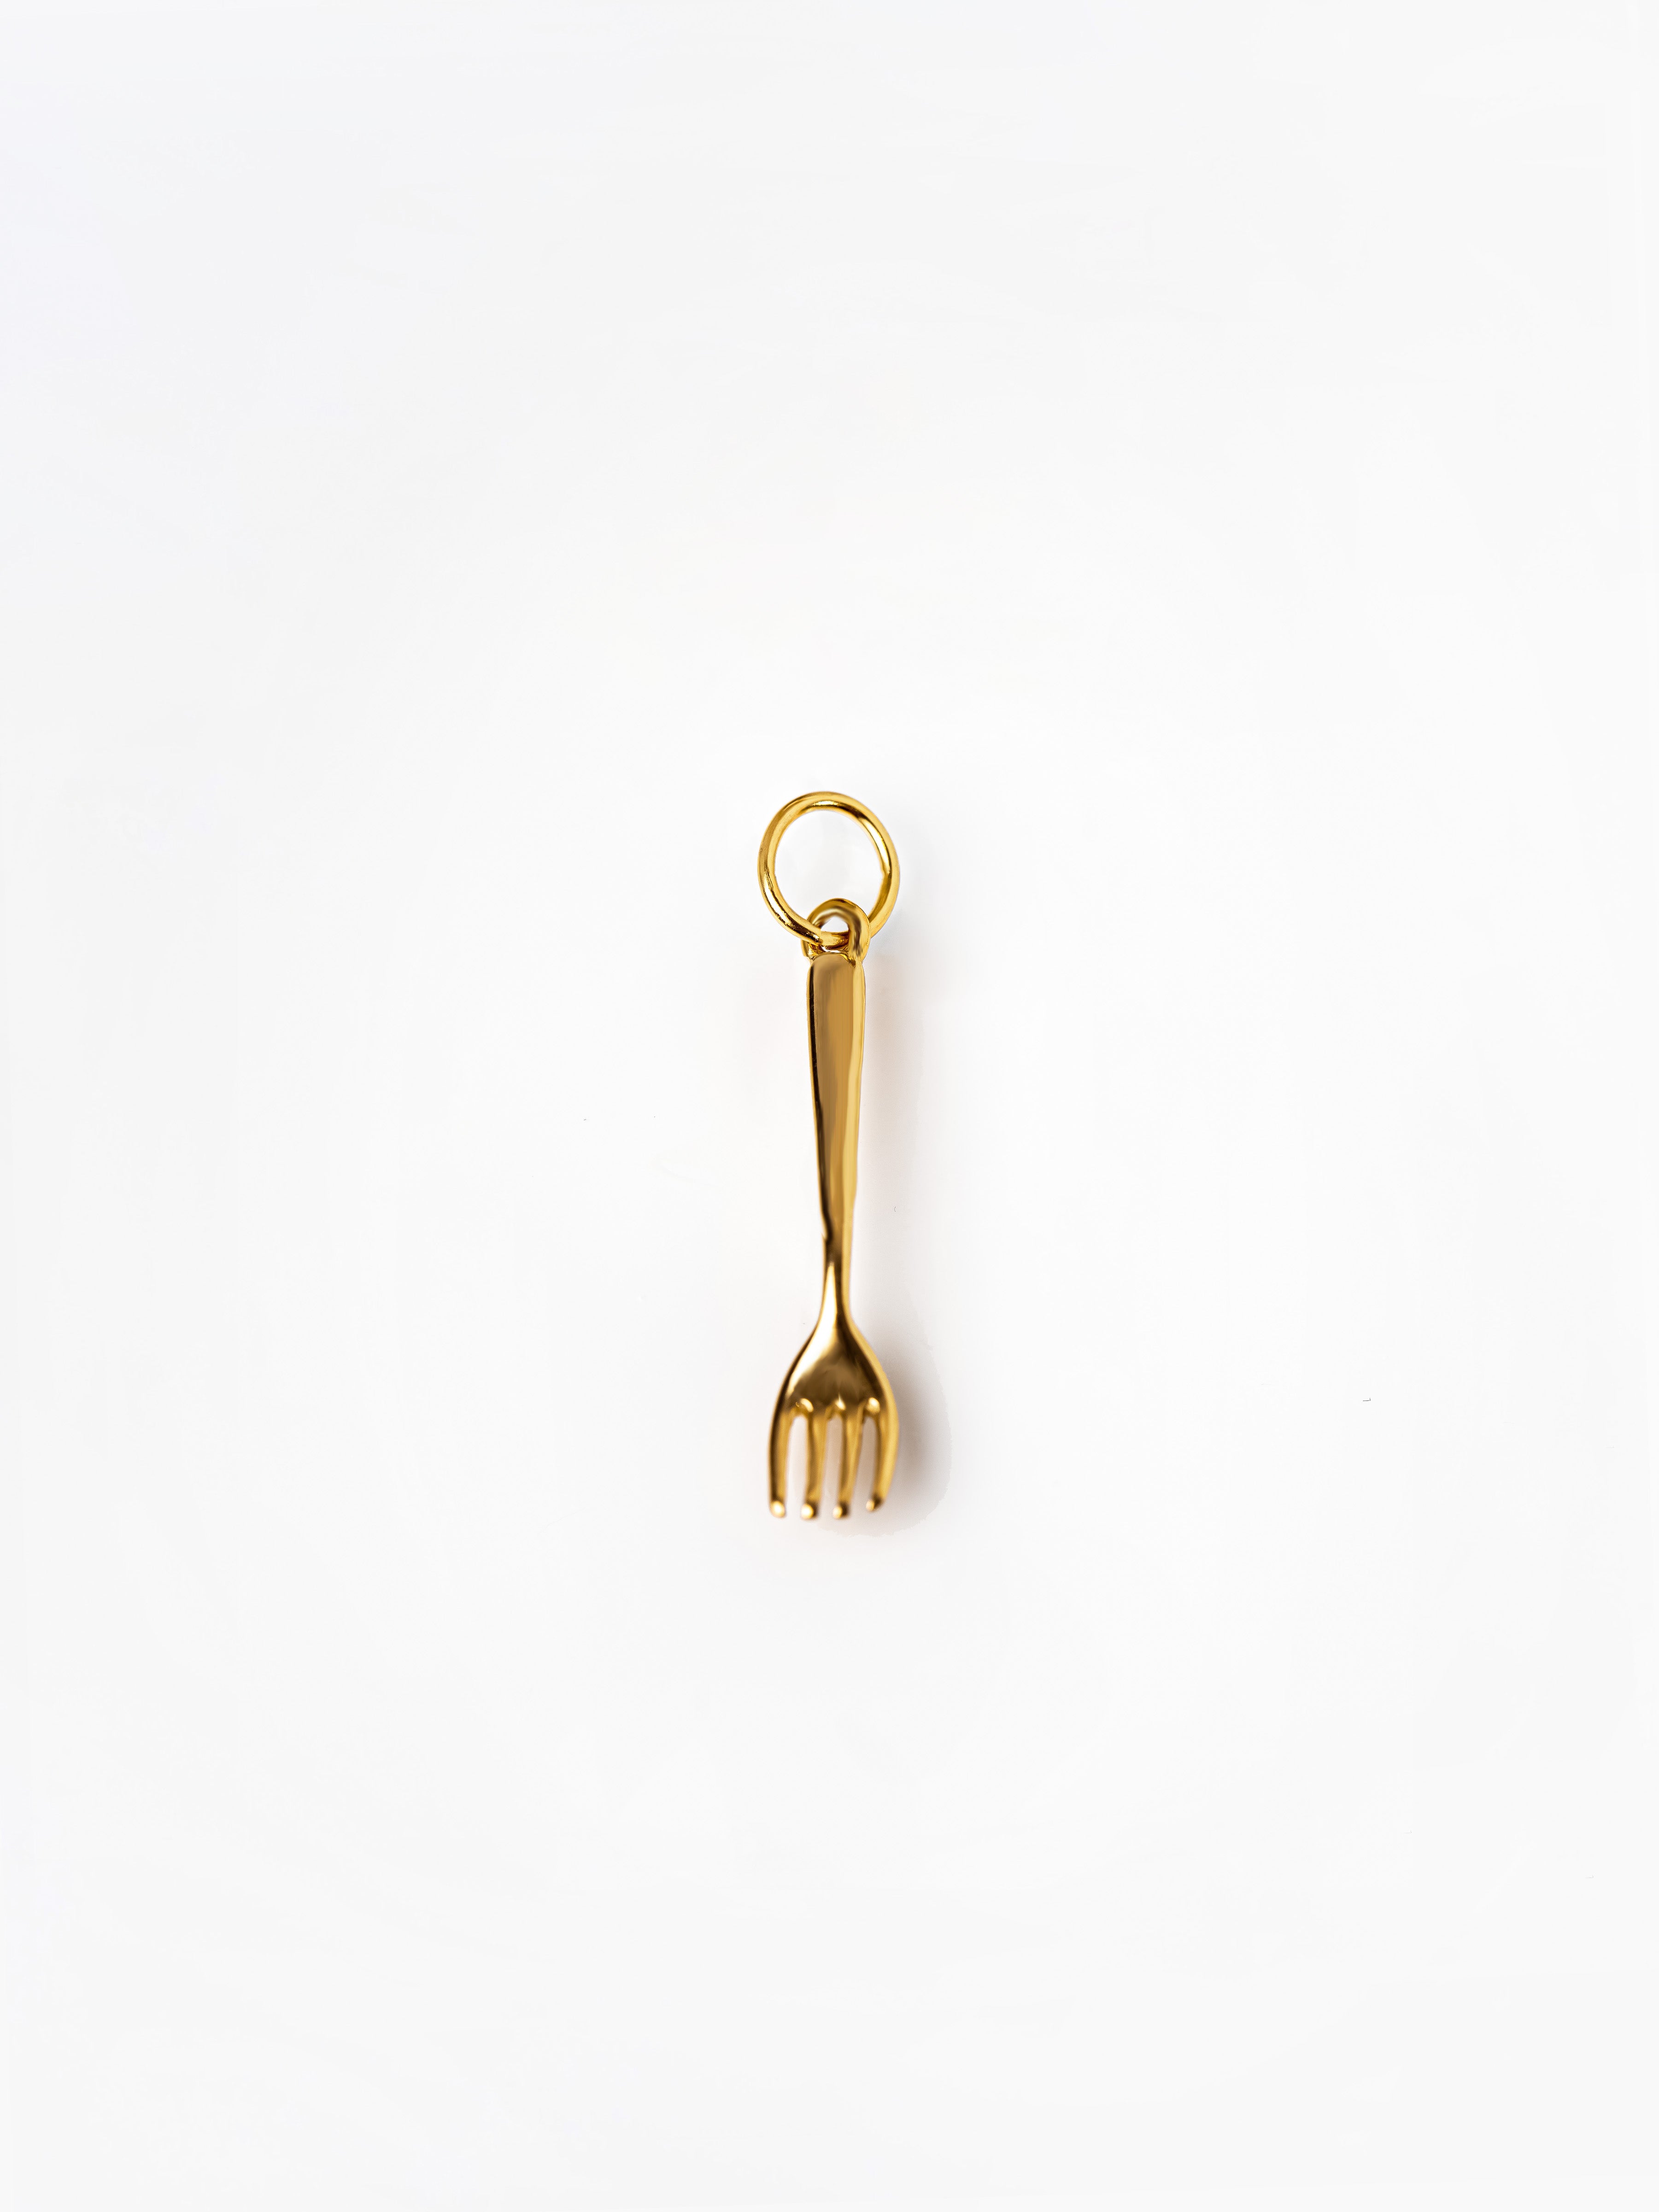 Gold Tiny Fork Pendant / Charm